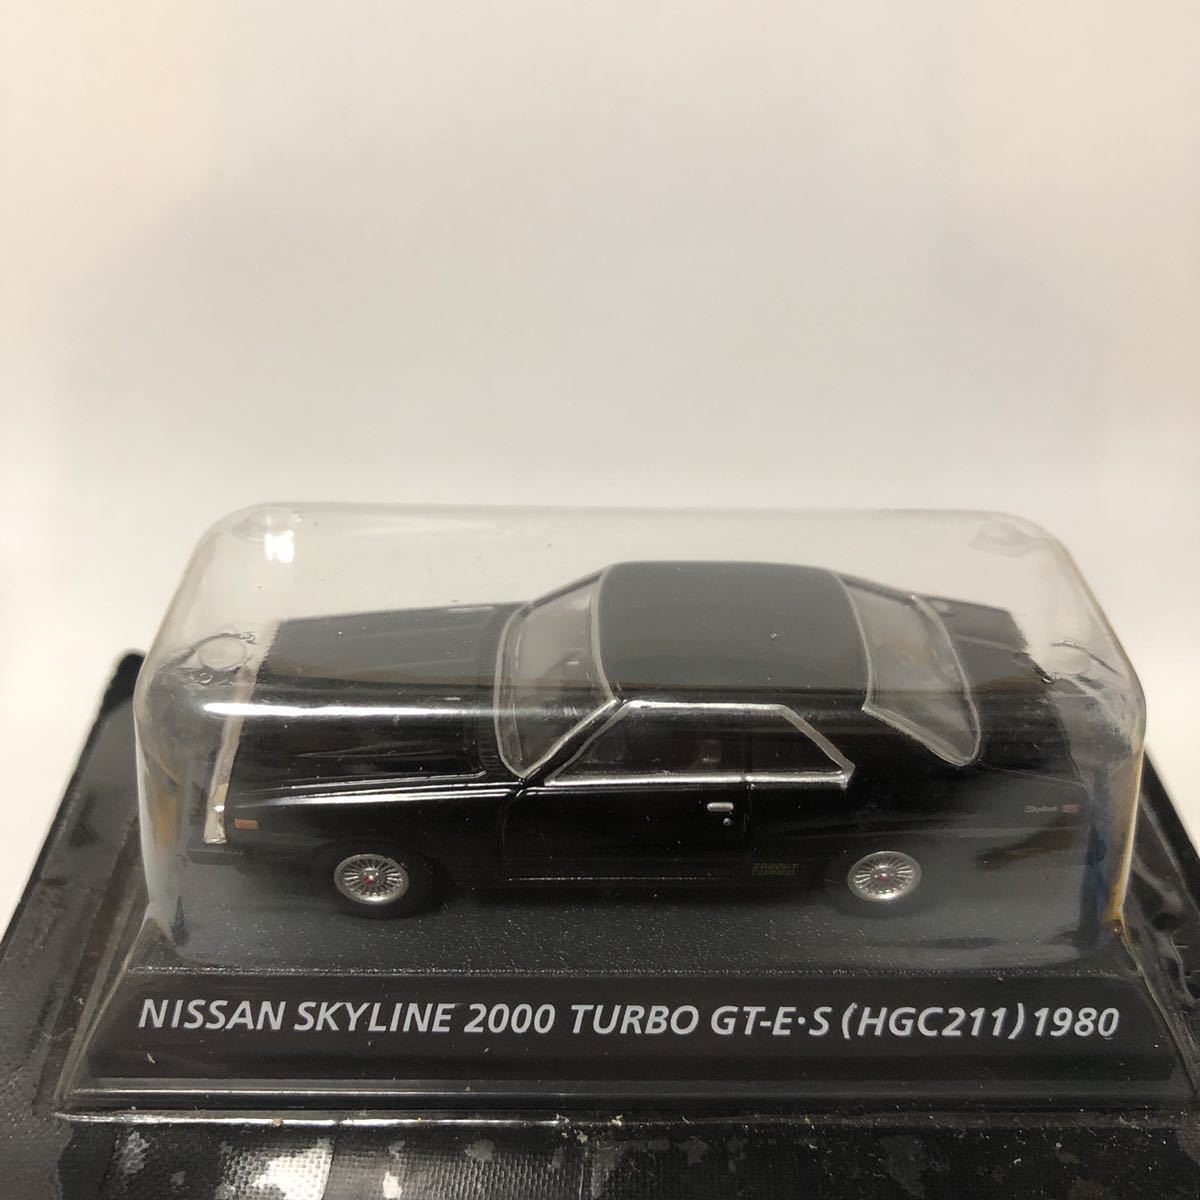  Konami out of print famous car collection Nissan Skyline 2000 turbo GT-ES HGC211 1980 black Skyline Japan 